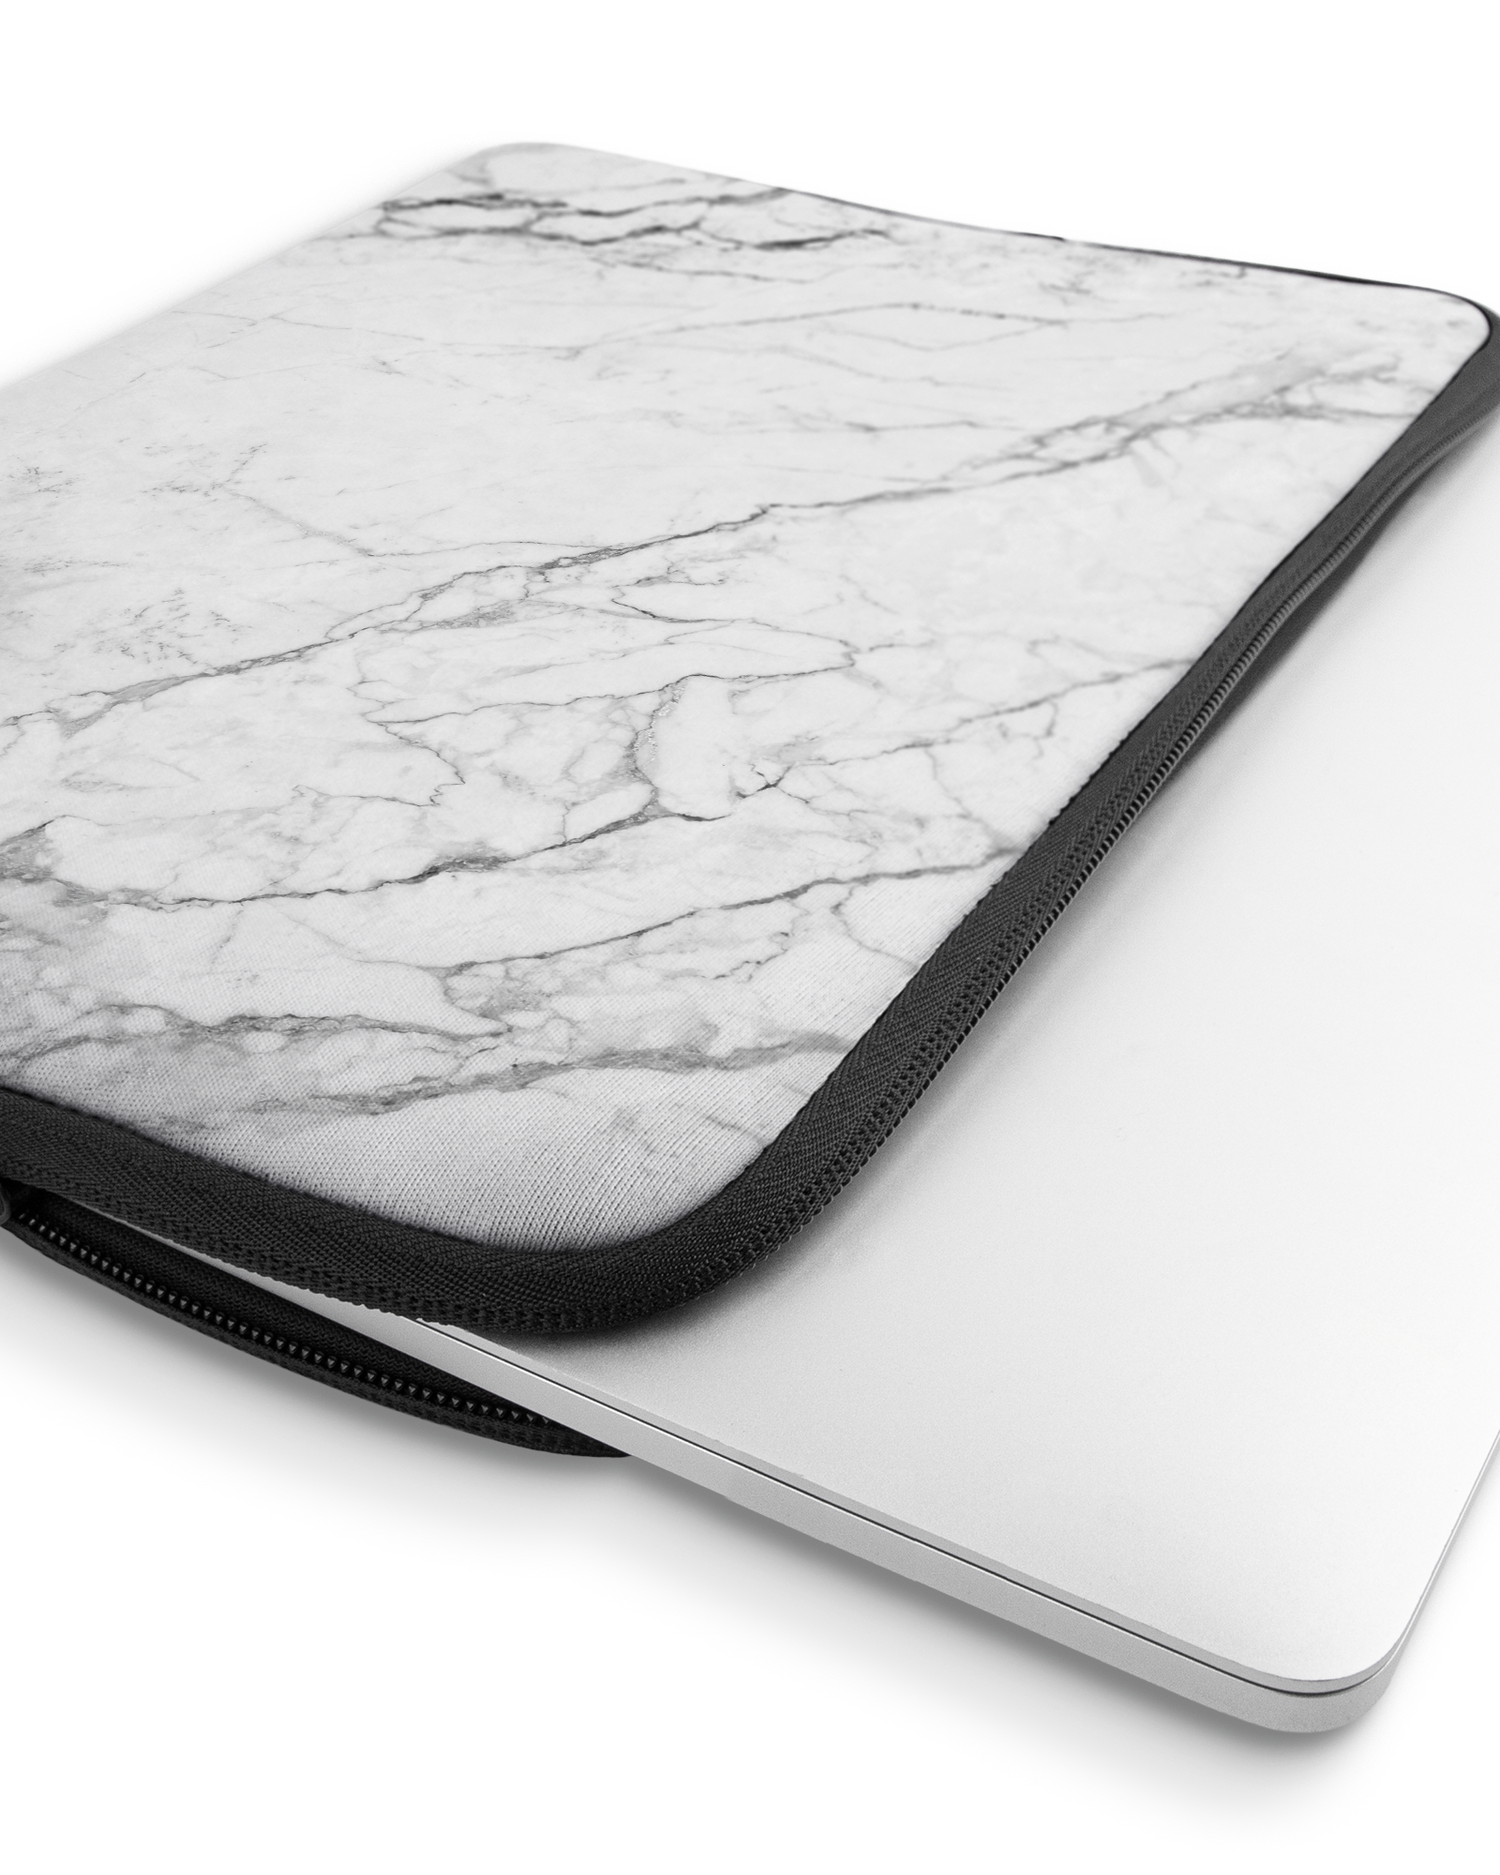 White Marble Laptophülle 16 Zoll mit Gerät im Inneren